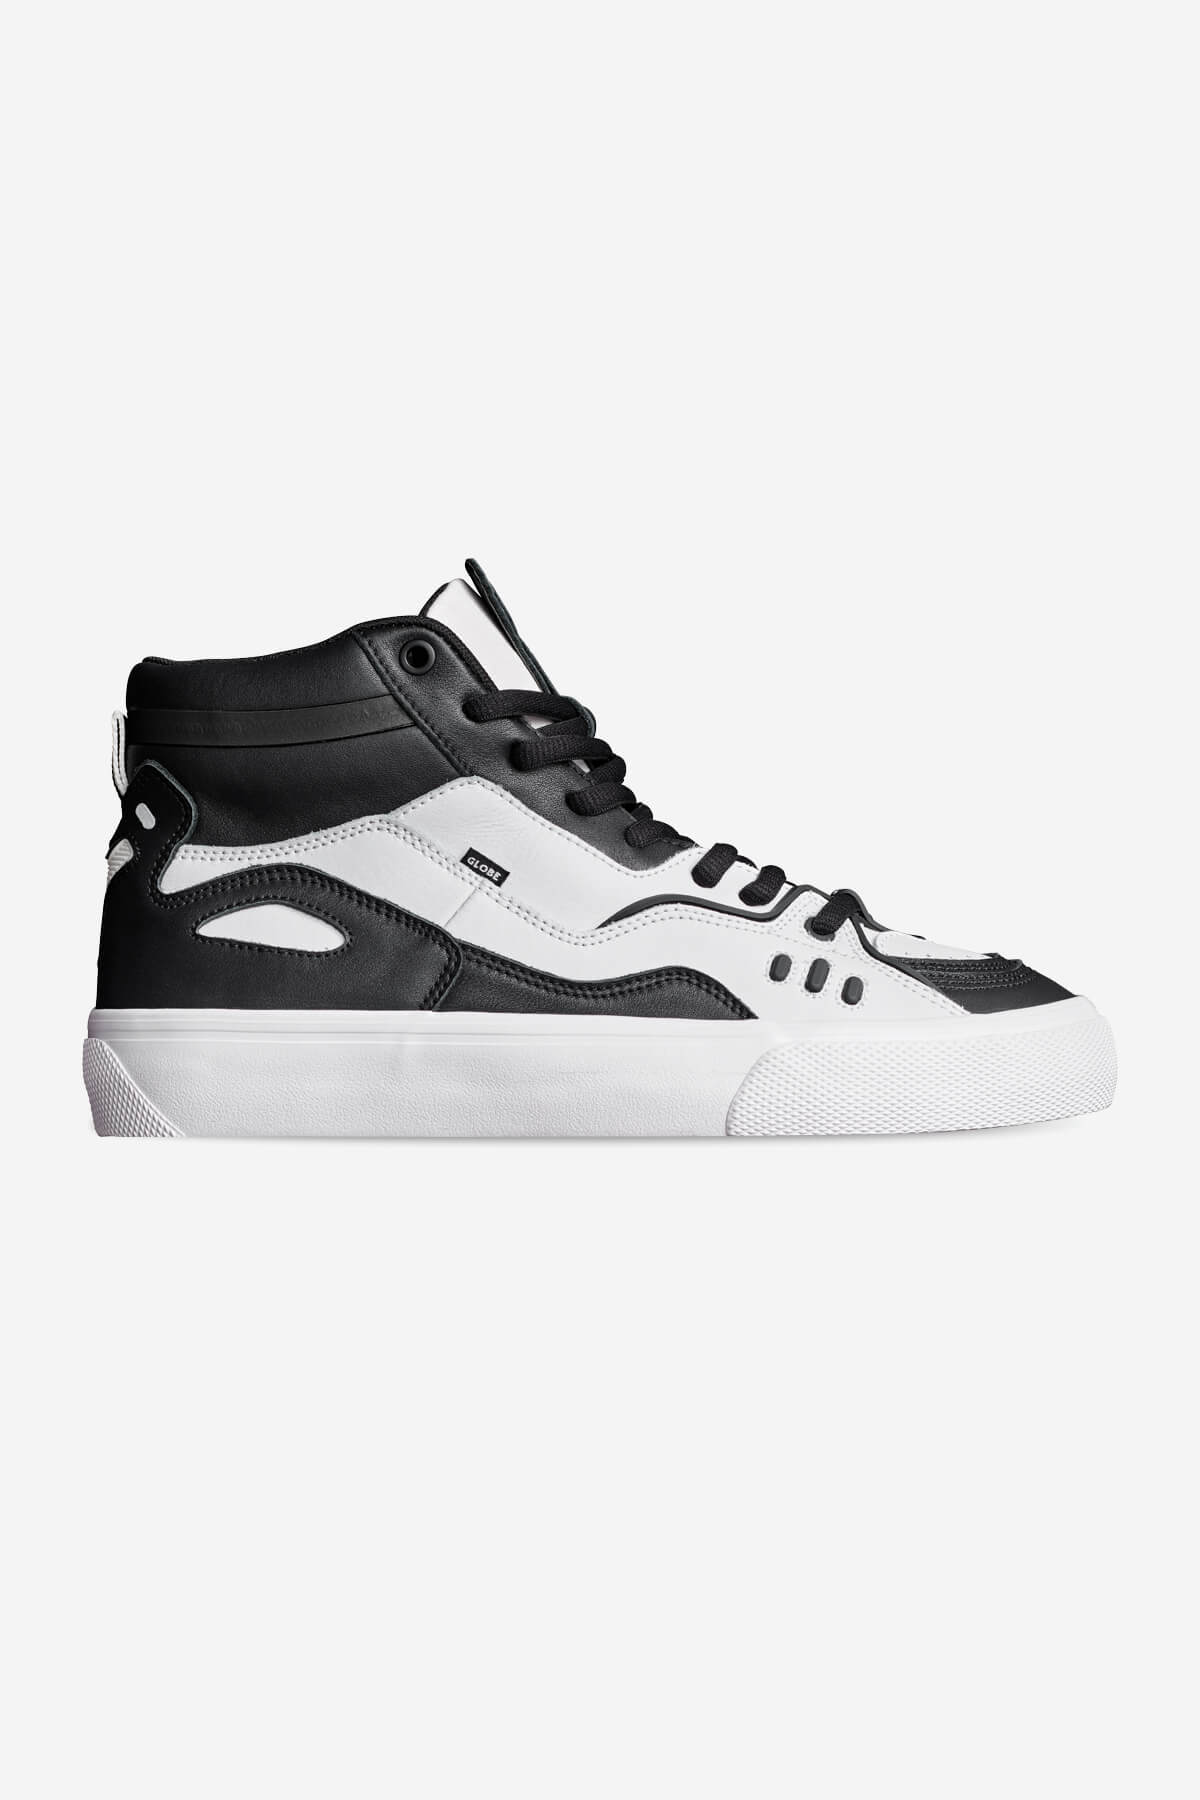 Globe - Dimension - Black/White - skateboard Schuhe